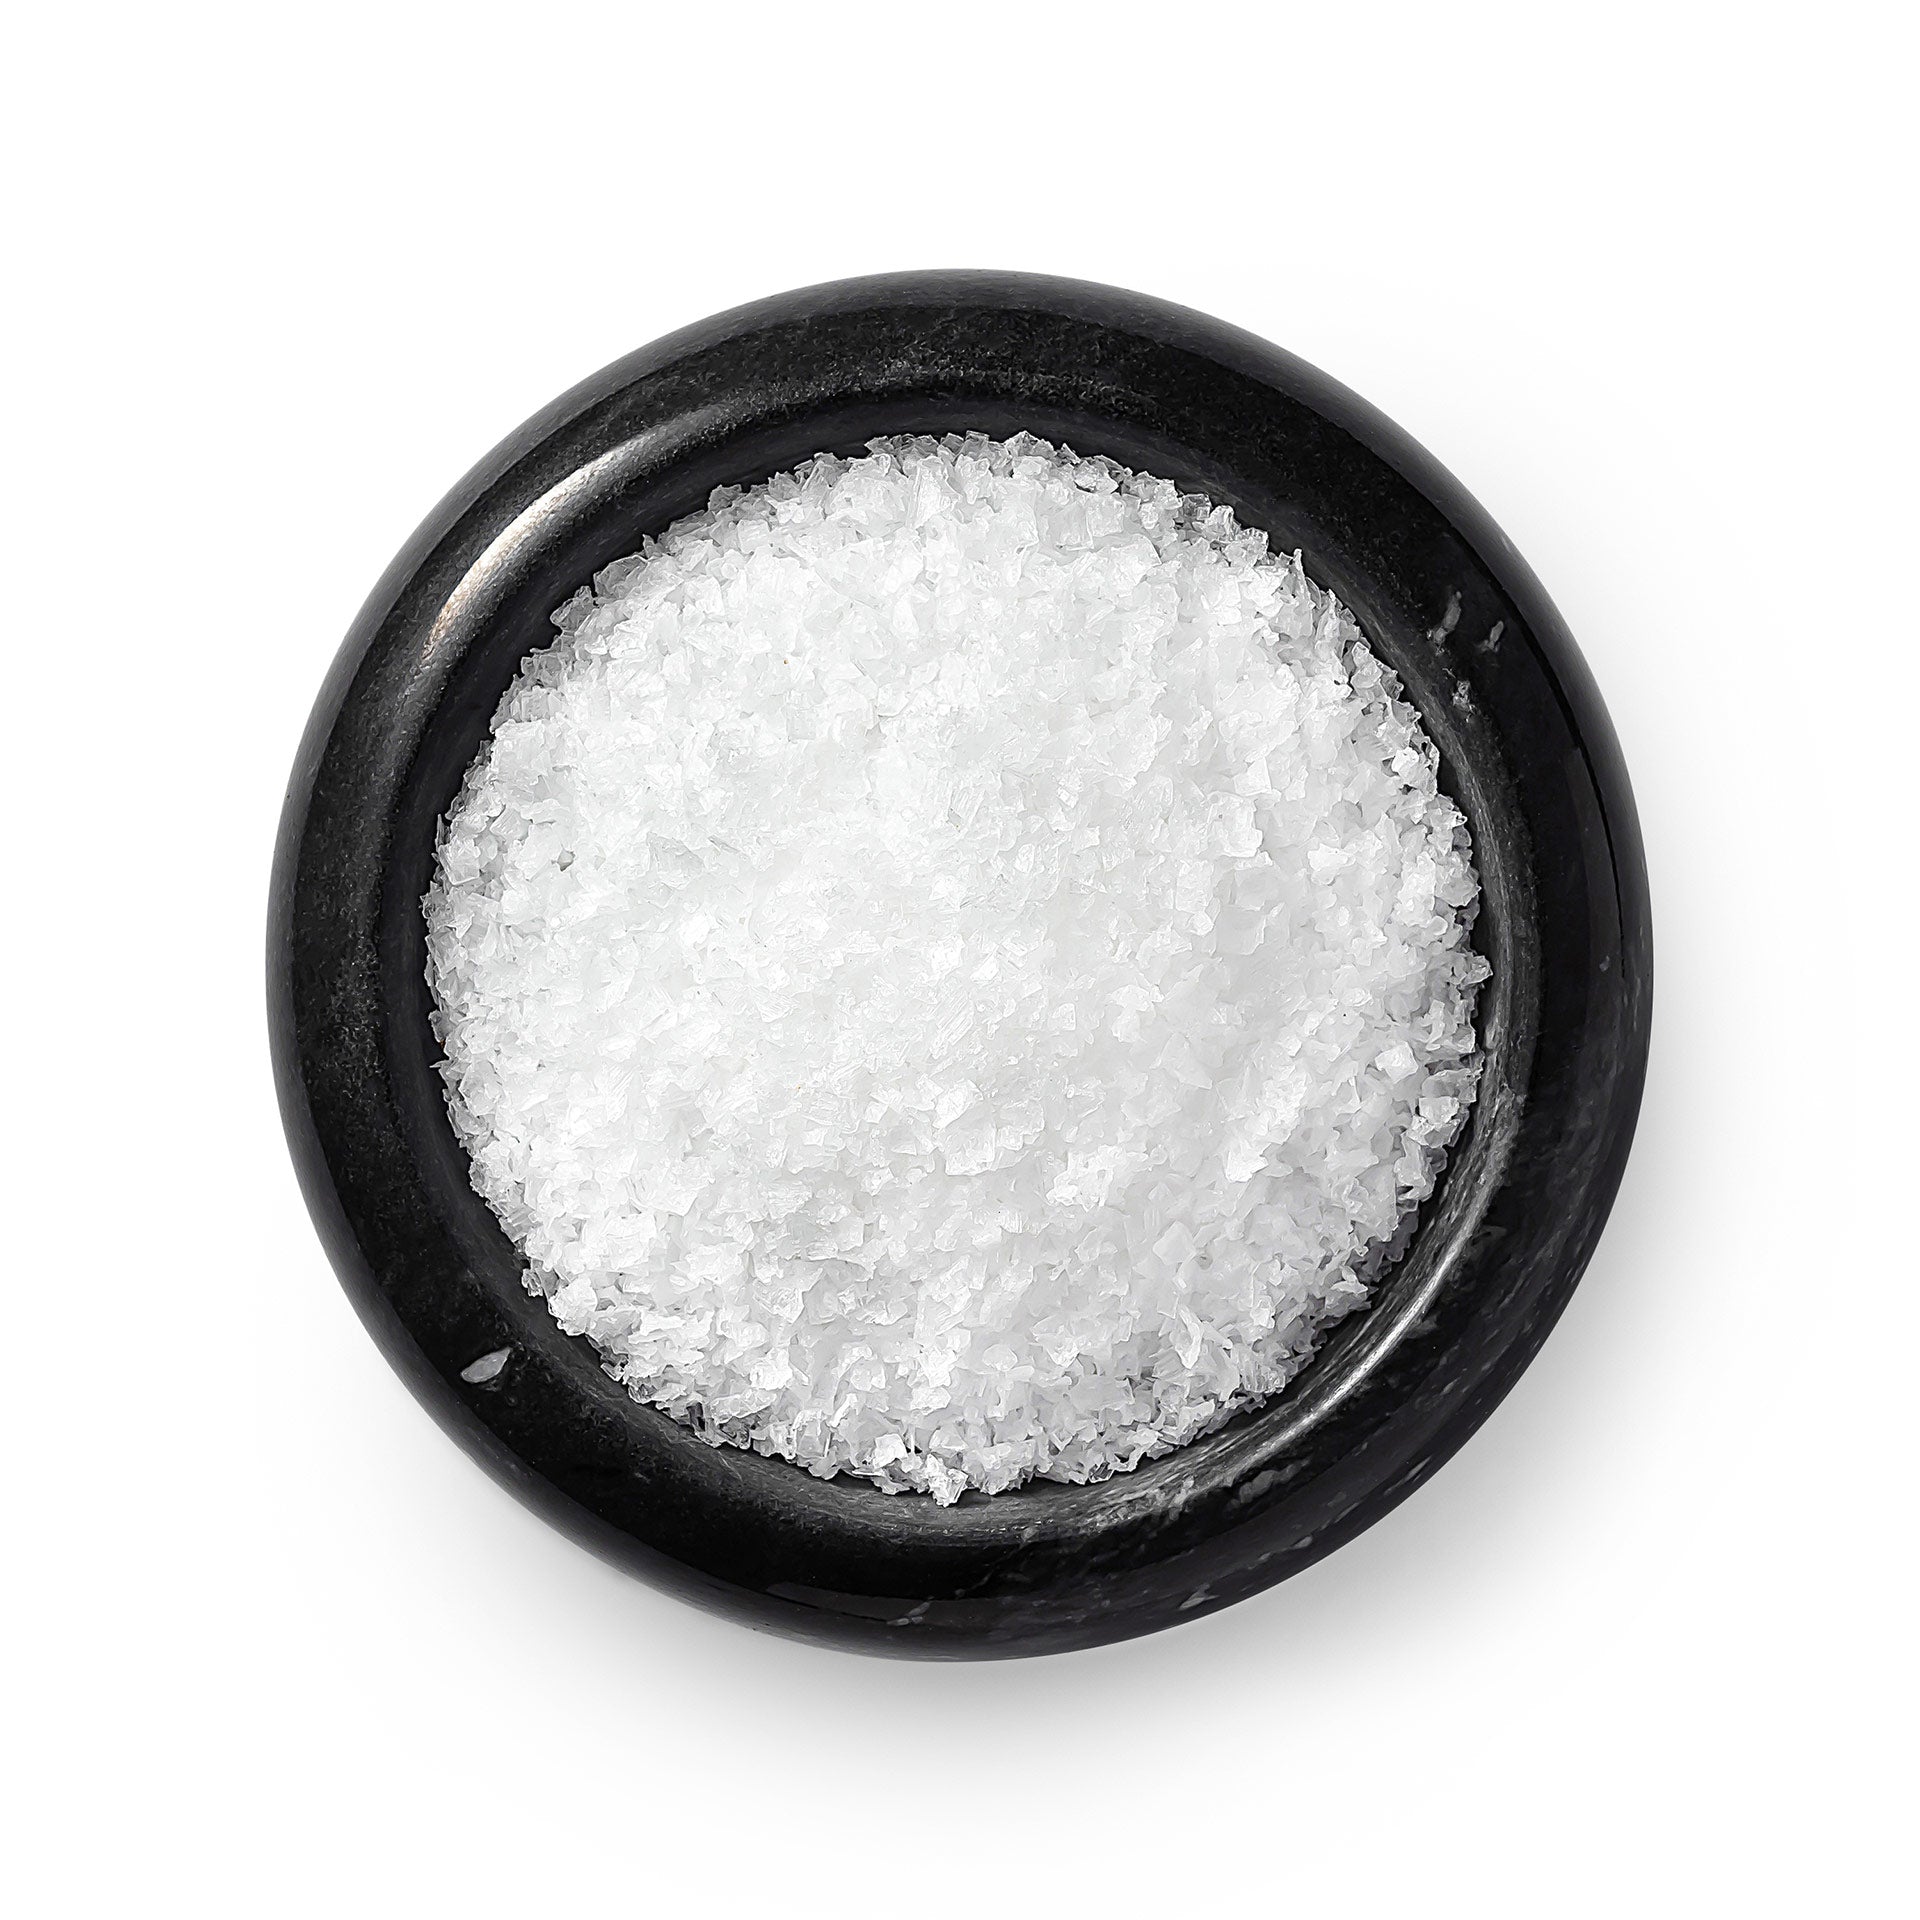 Premium Cooking & Seasoning Salts – Osmo Salt